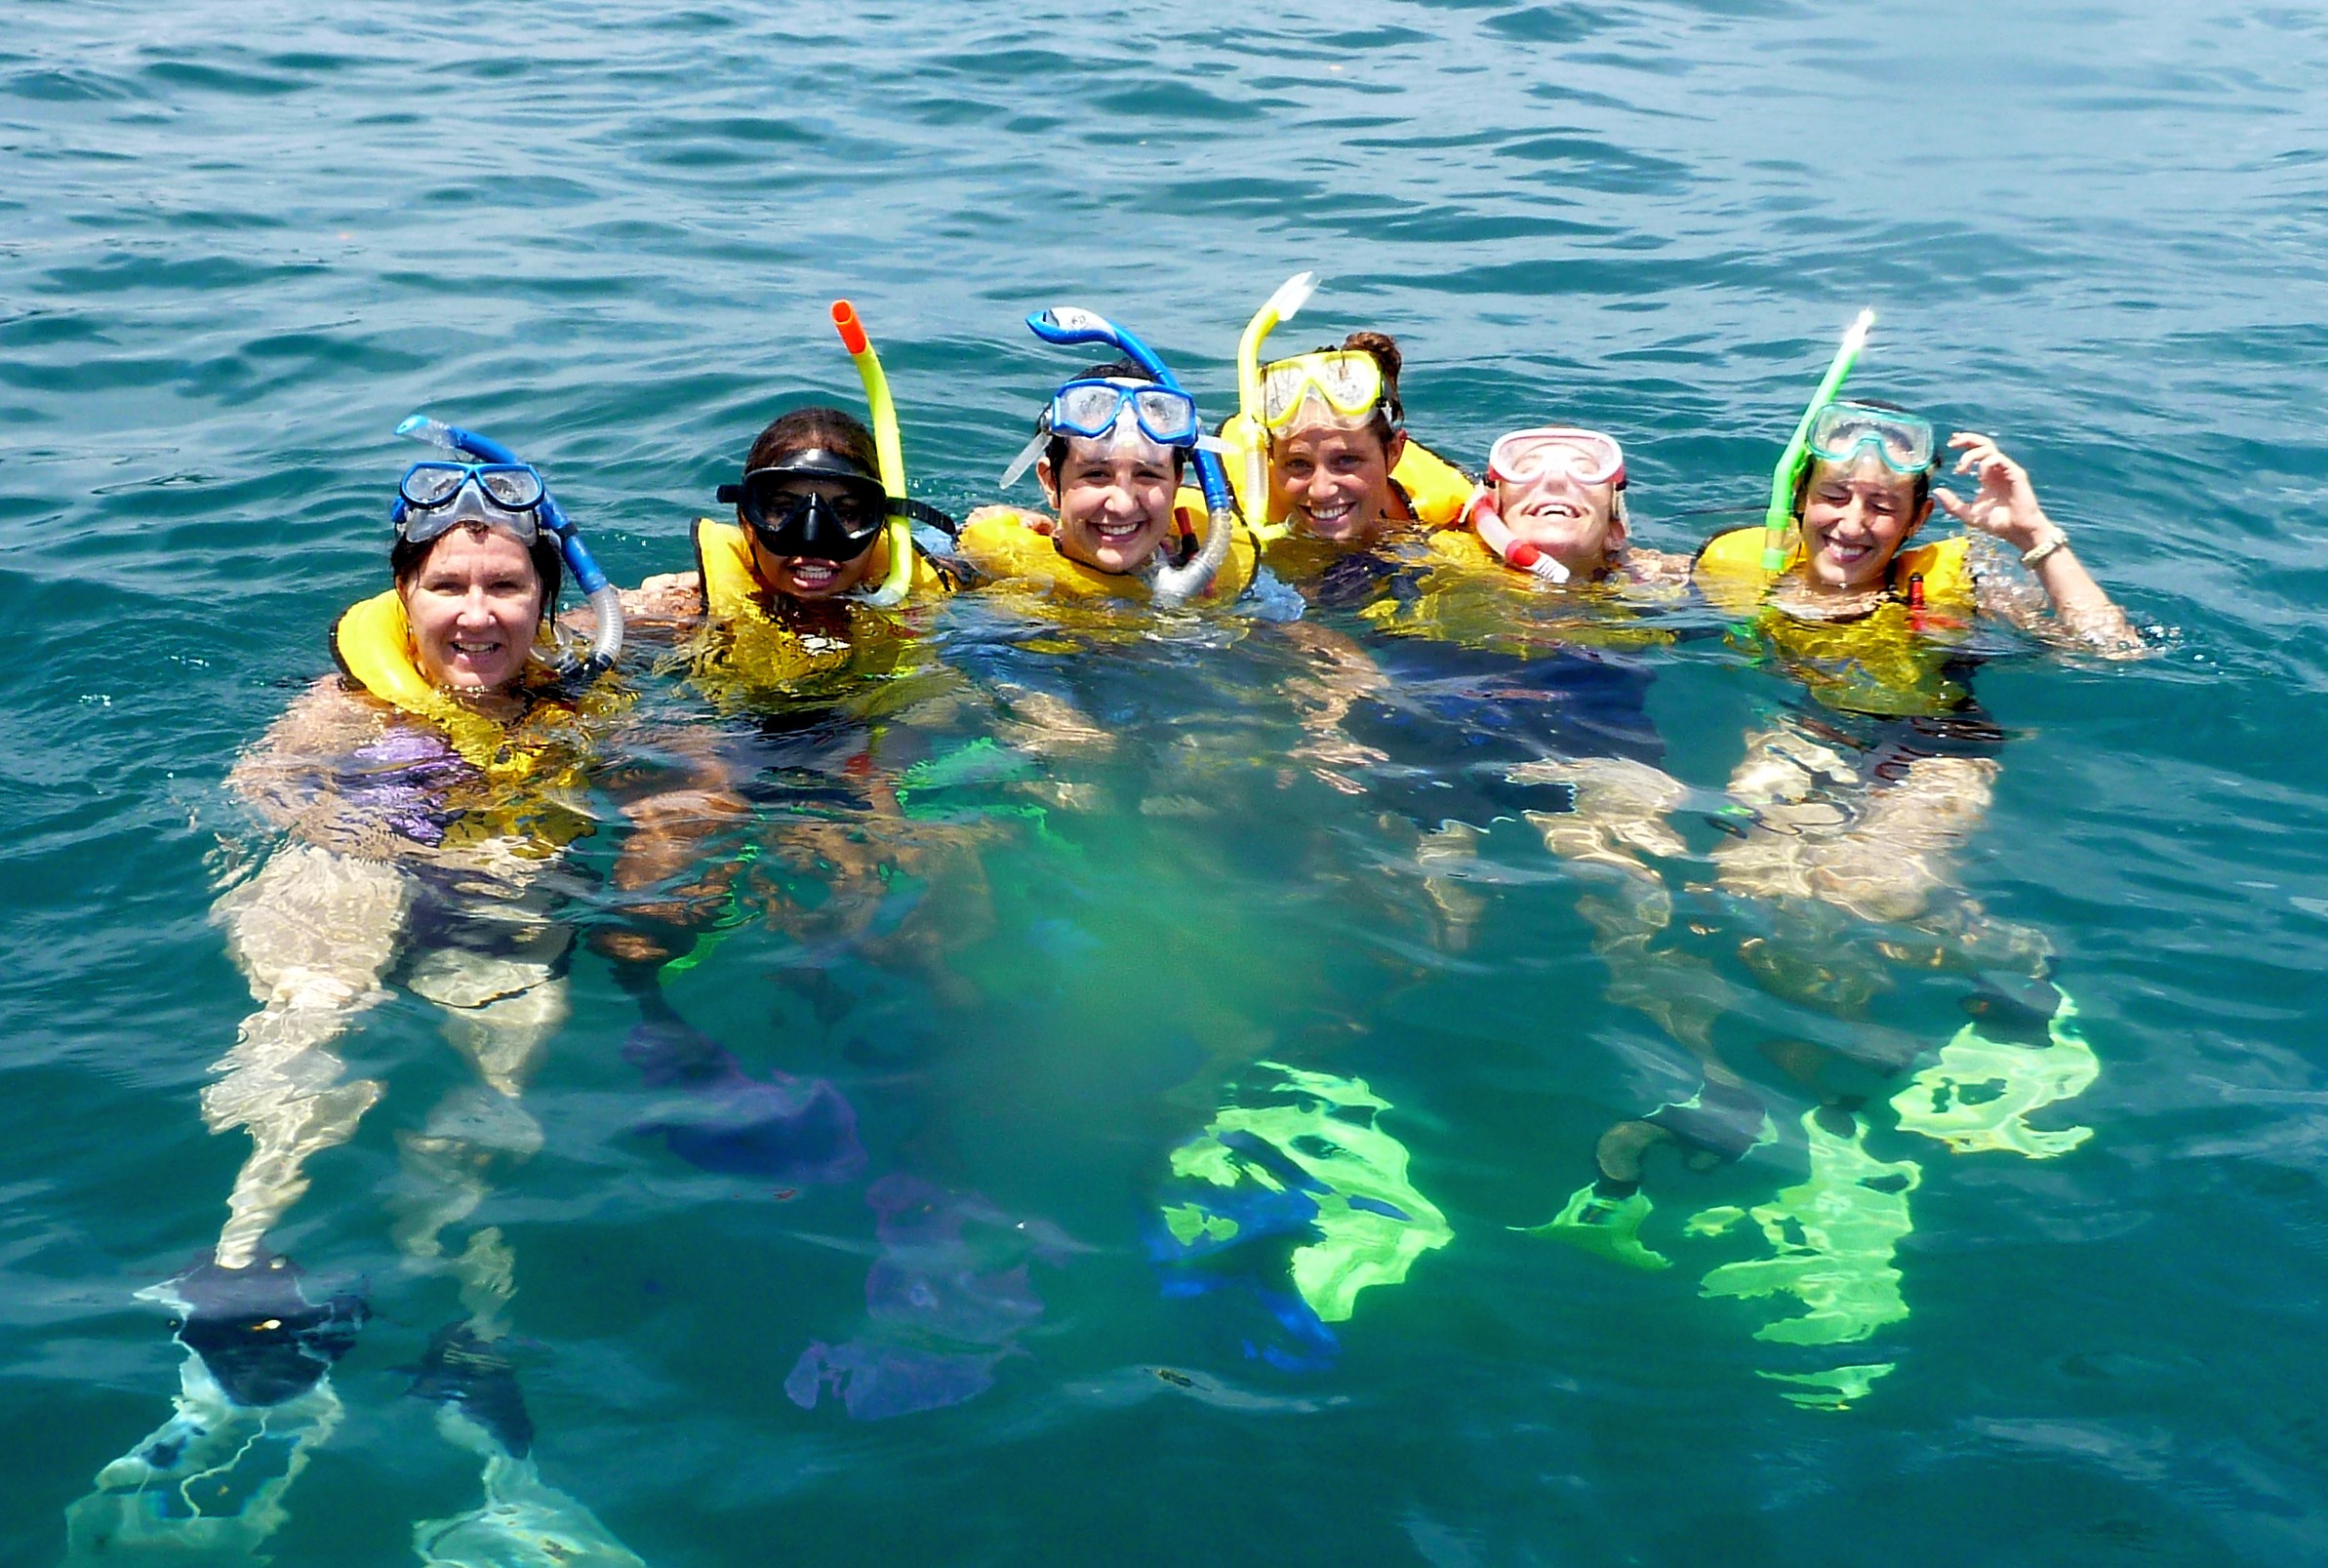 Students snorkeling in the ocean